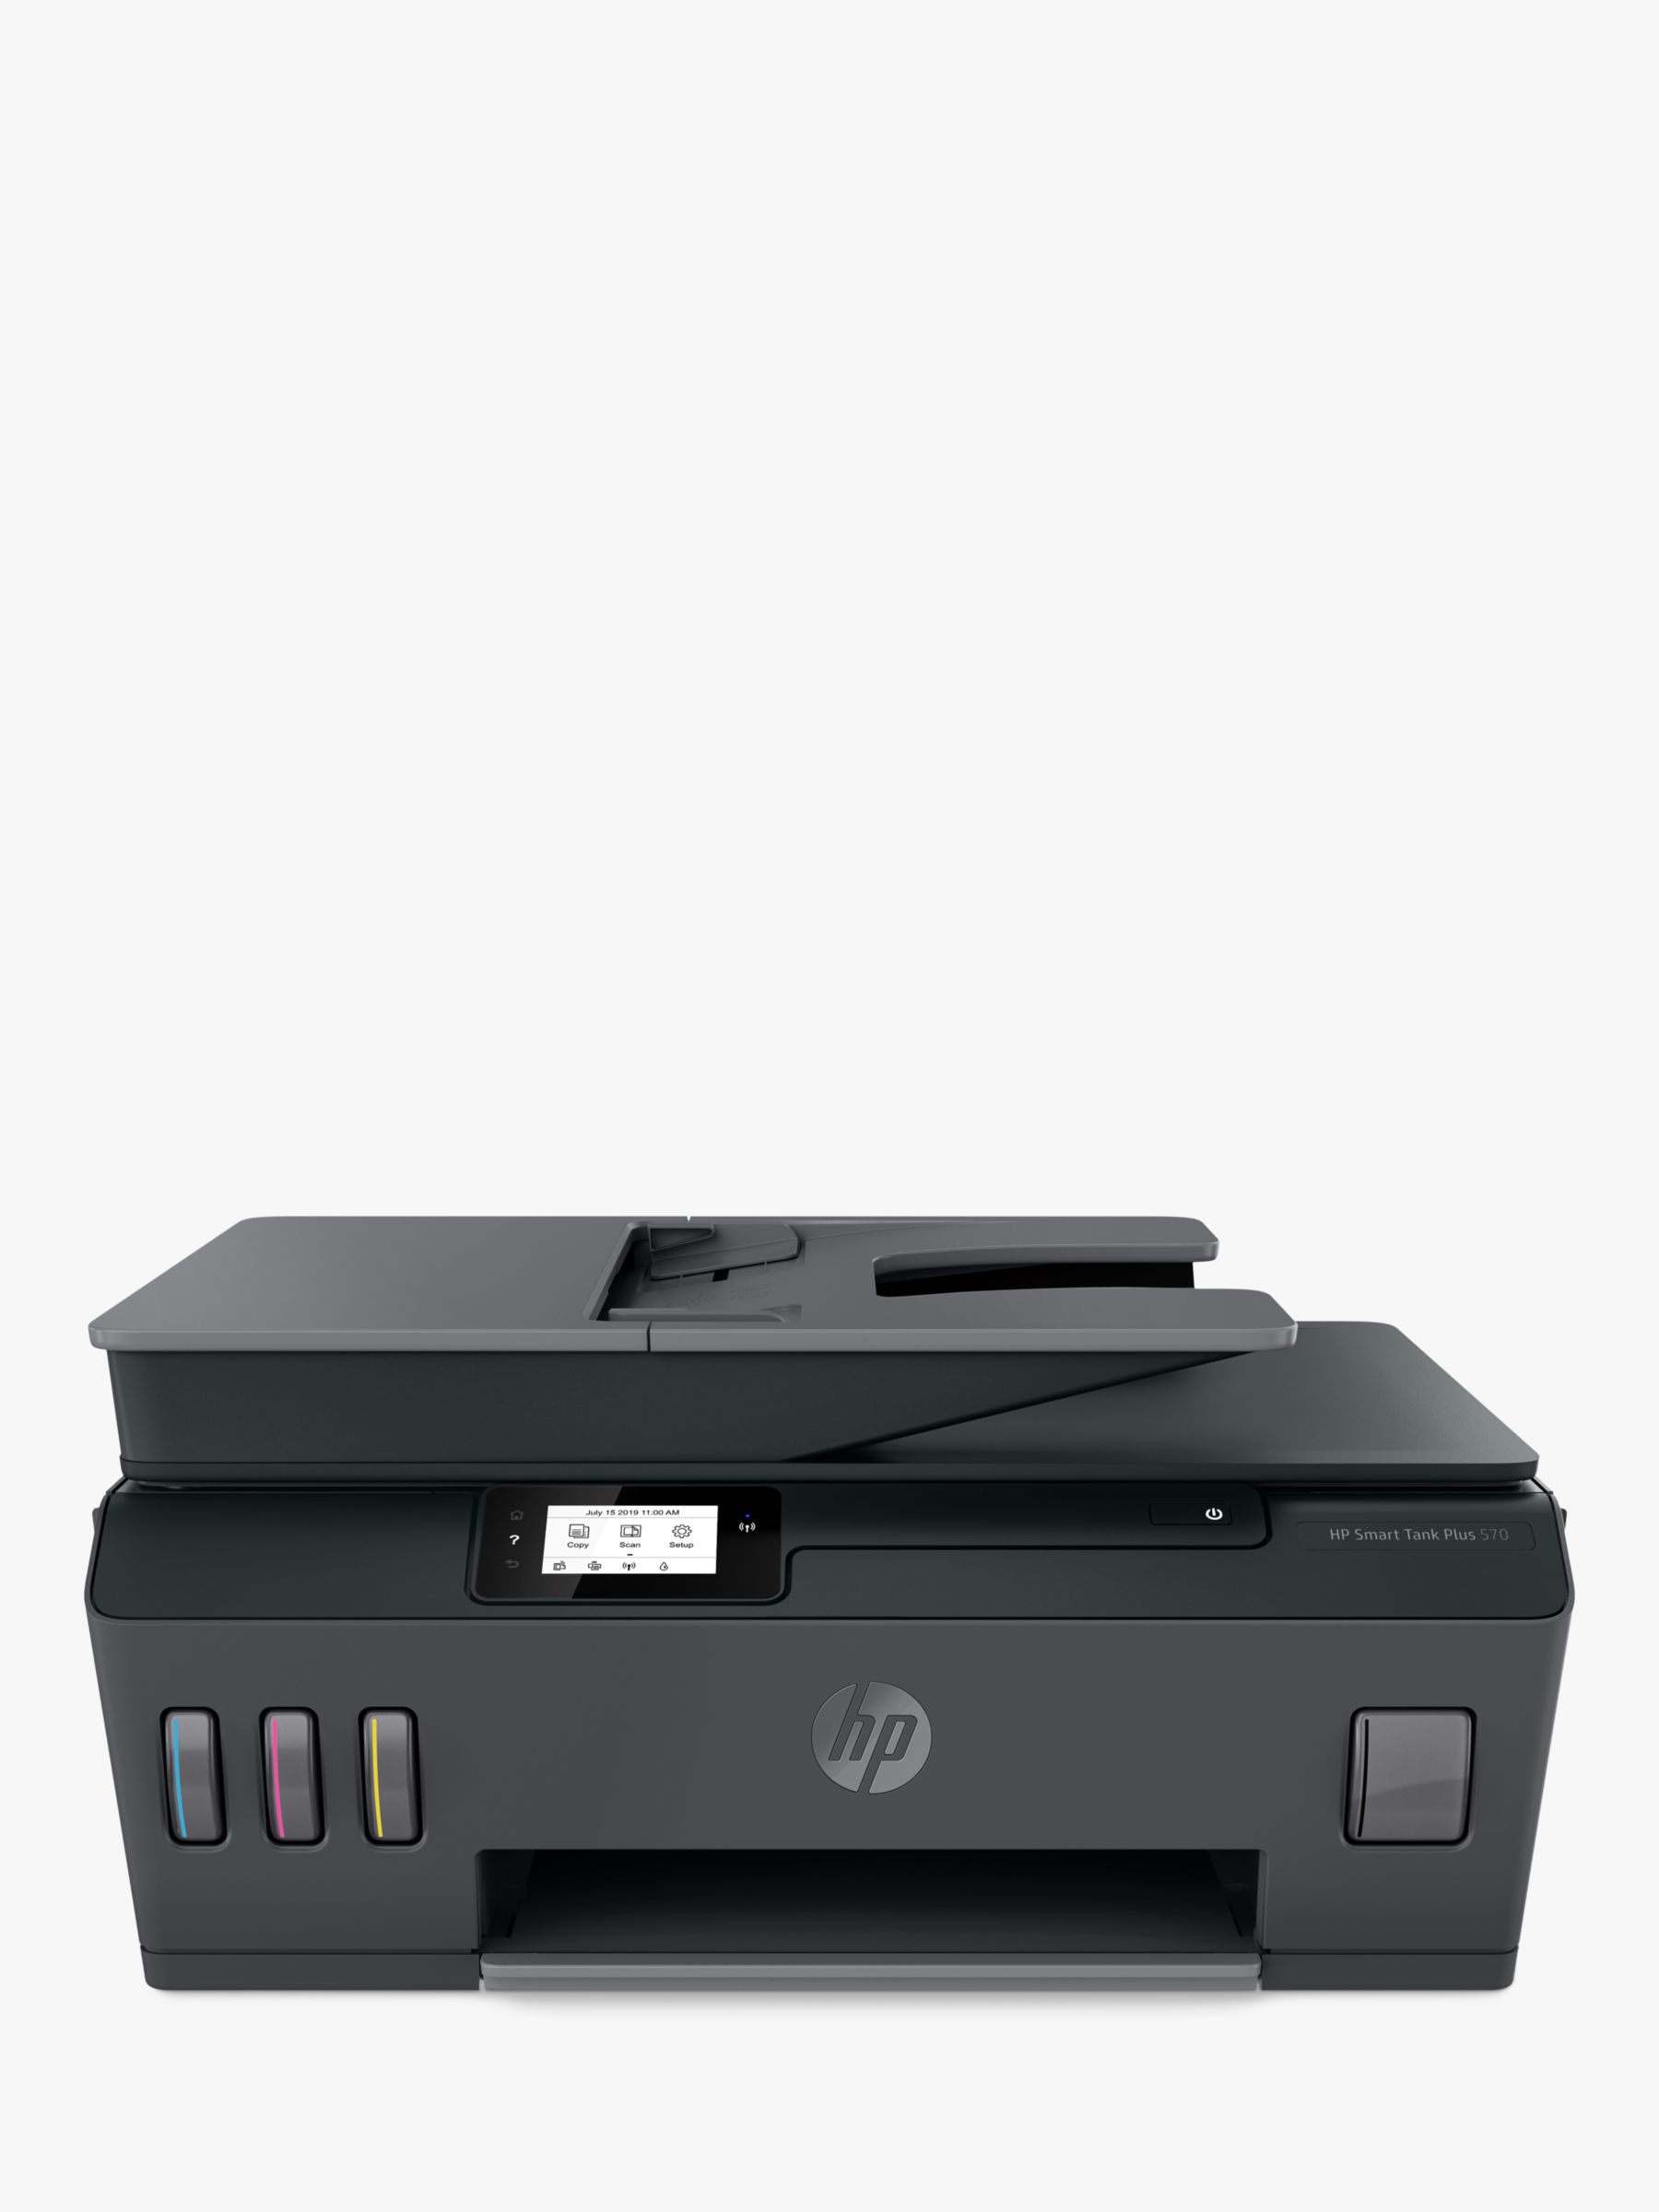 HP Smart Tank 7305 printer setup, Unbox HP Smart Tank 7305 printer